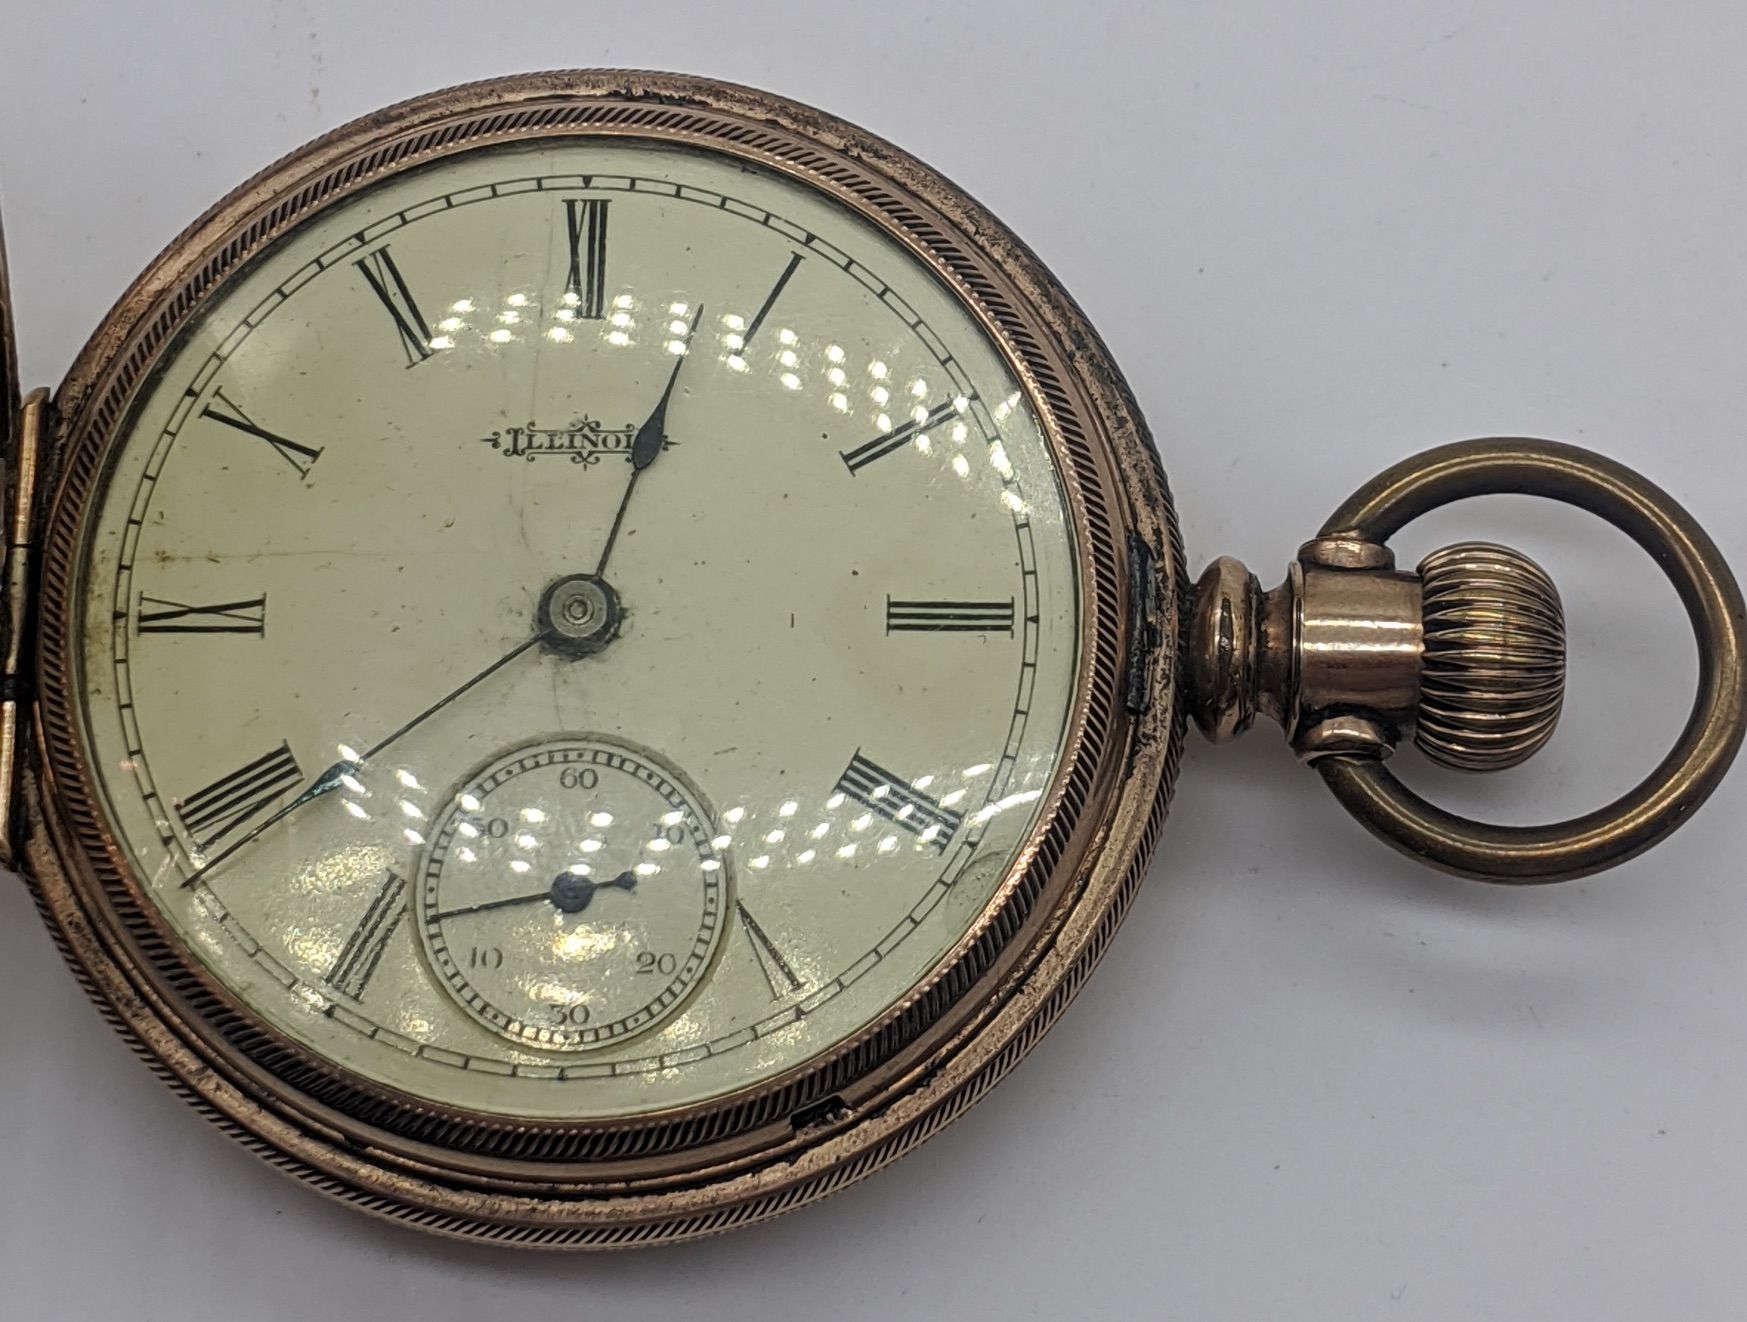 Illinois Watch 伊利诺伊州手表公司金质正反面怀表，罗马数字，附属表盘，刻有